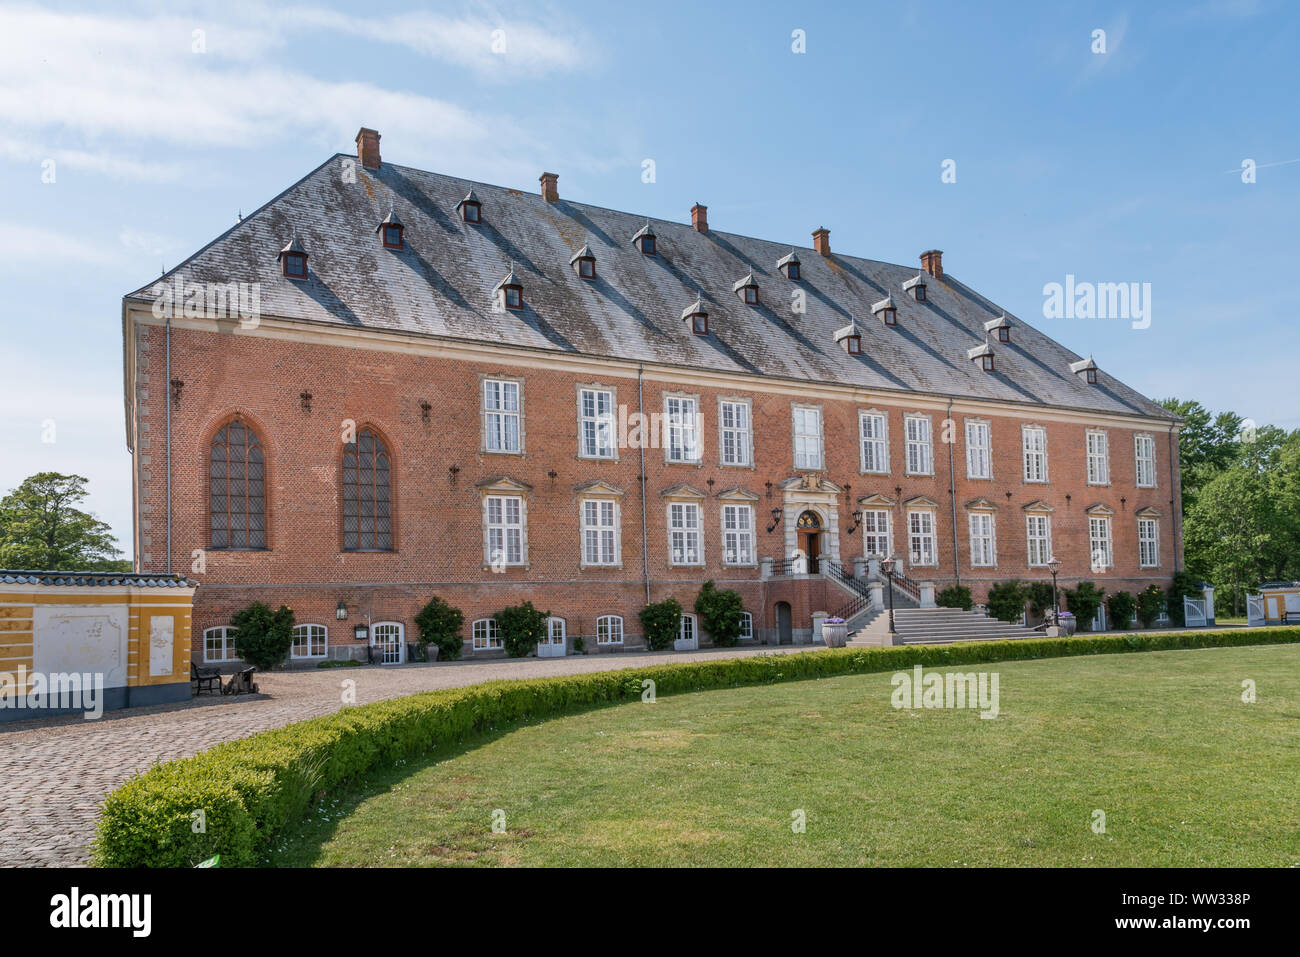 The red brick-facade of Valdemar castle, Taasinge, Svendborg, Denmark, 11 July 2019 Stock Photo